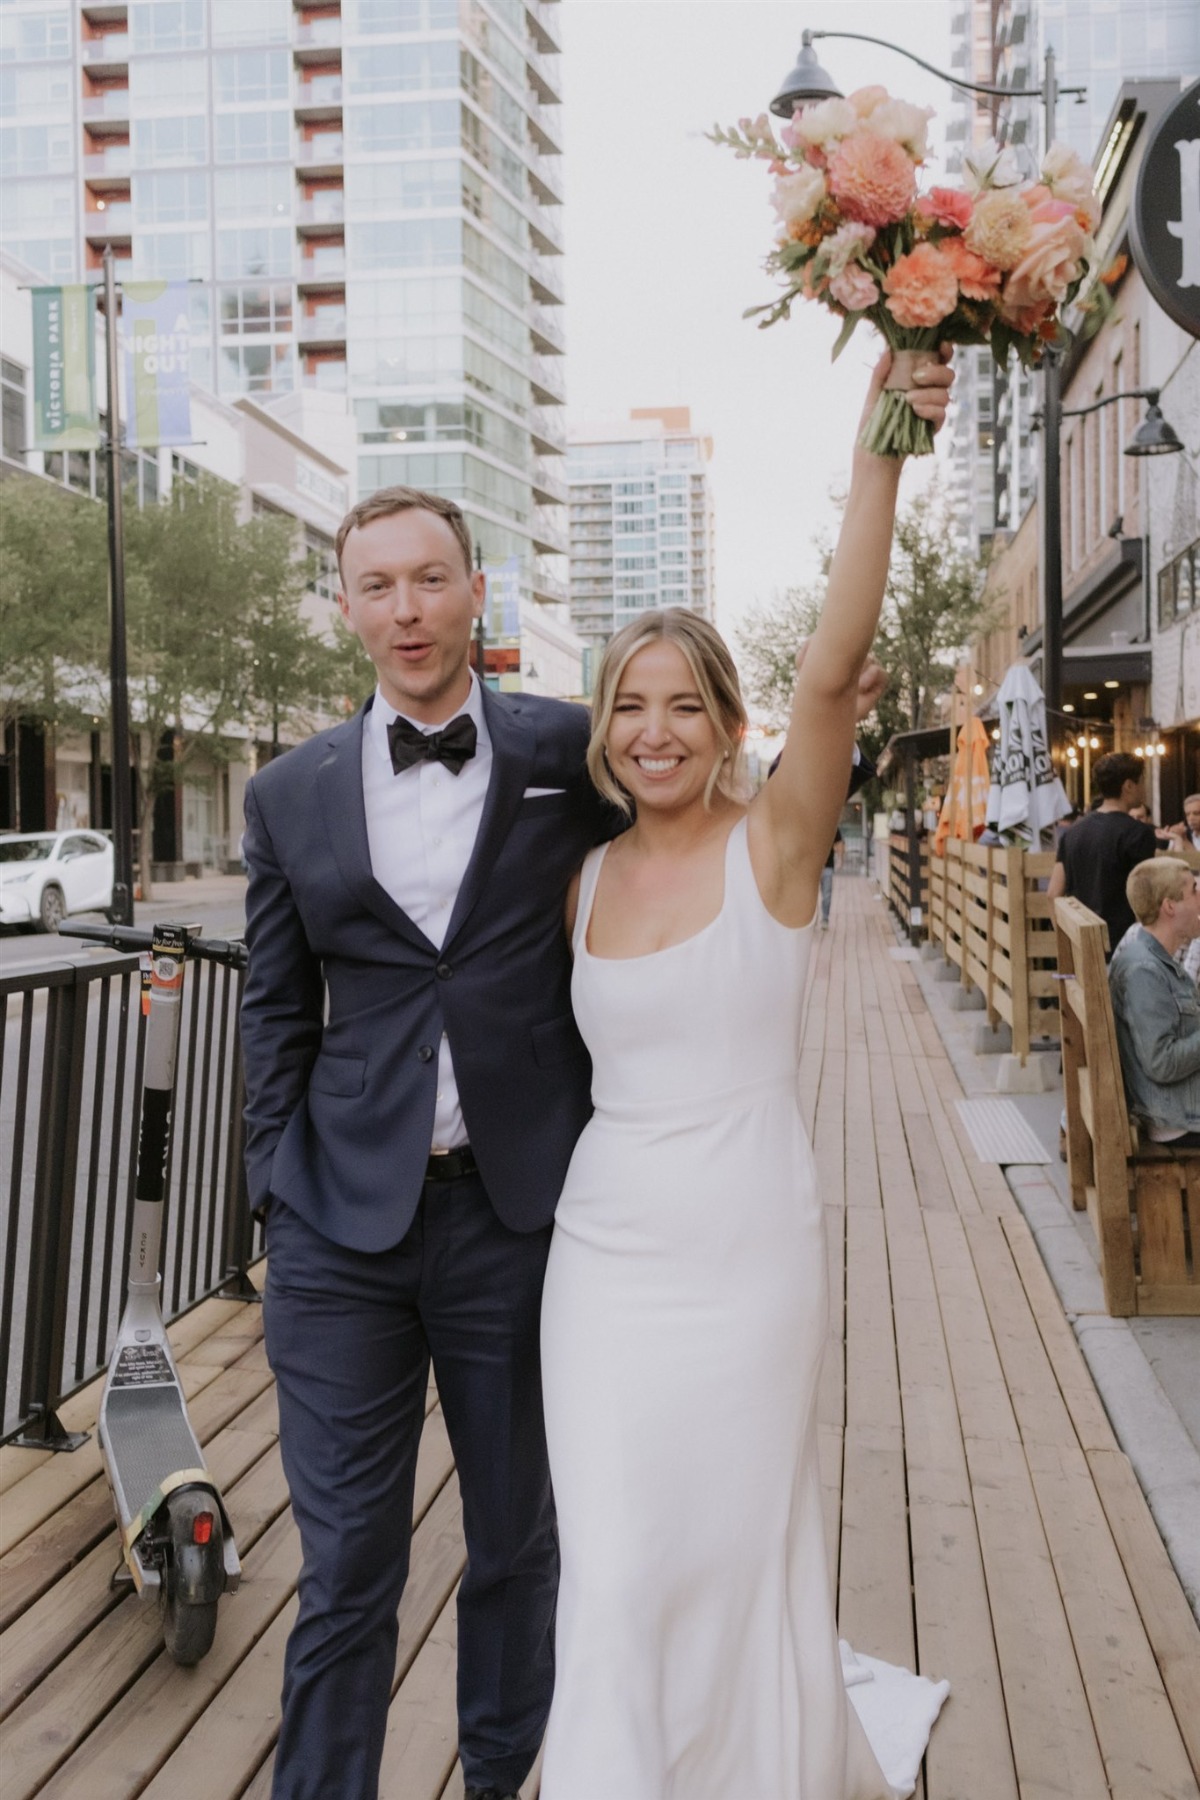 Celebrating Newlyweds in Canada